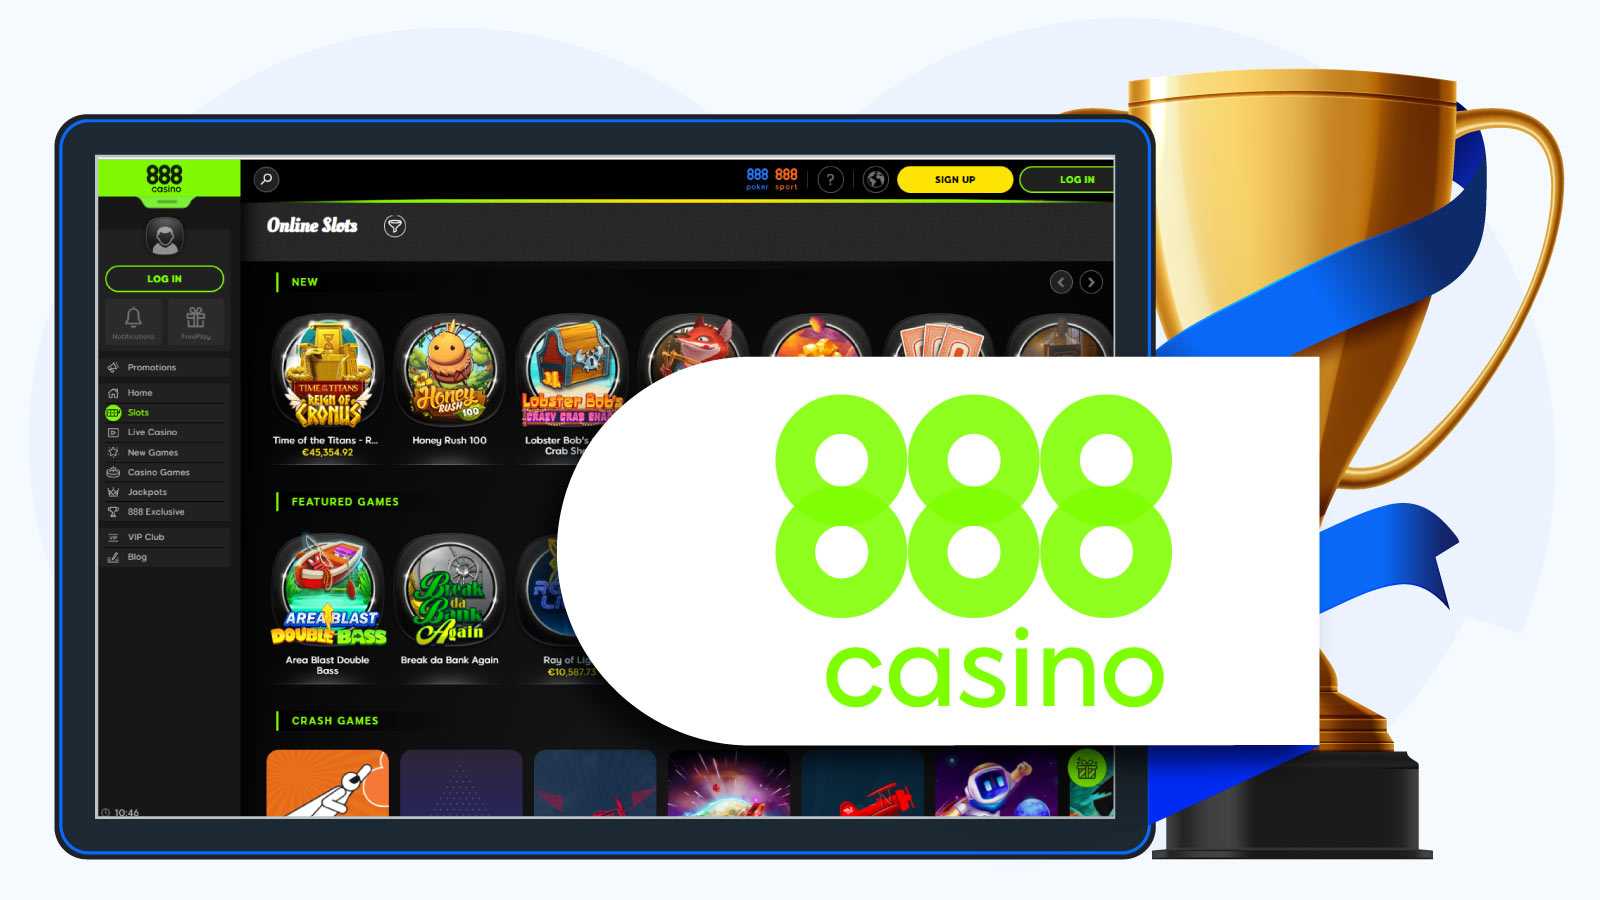 888casino – The biggest batch Irish players can claim at a casino